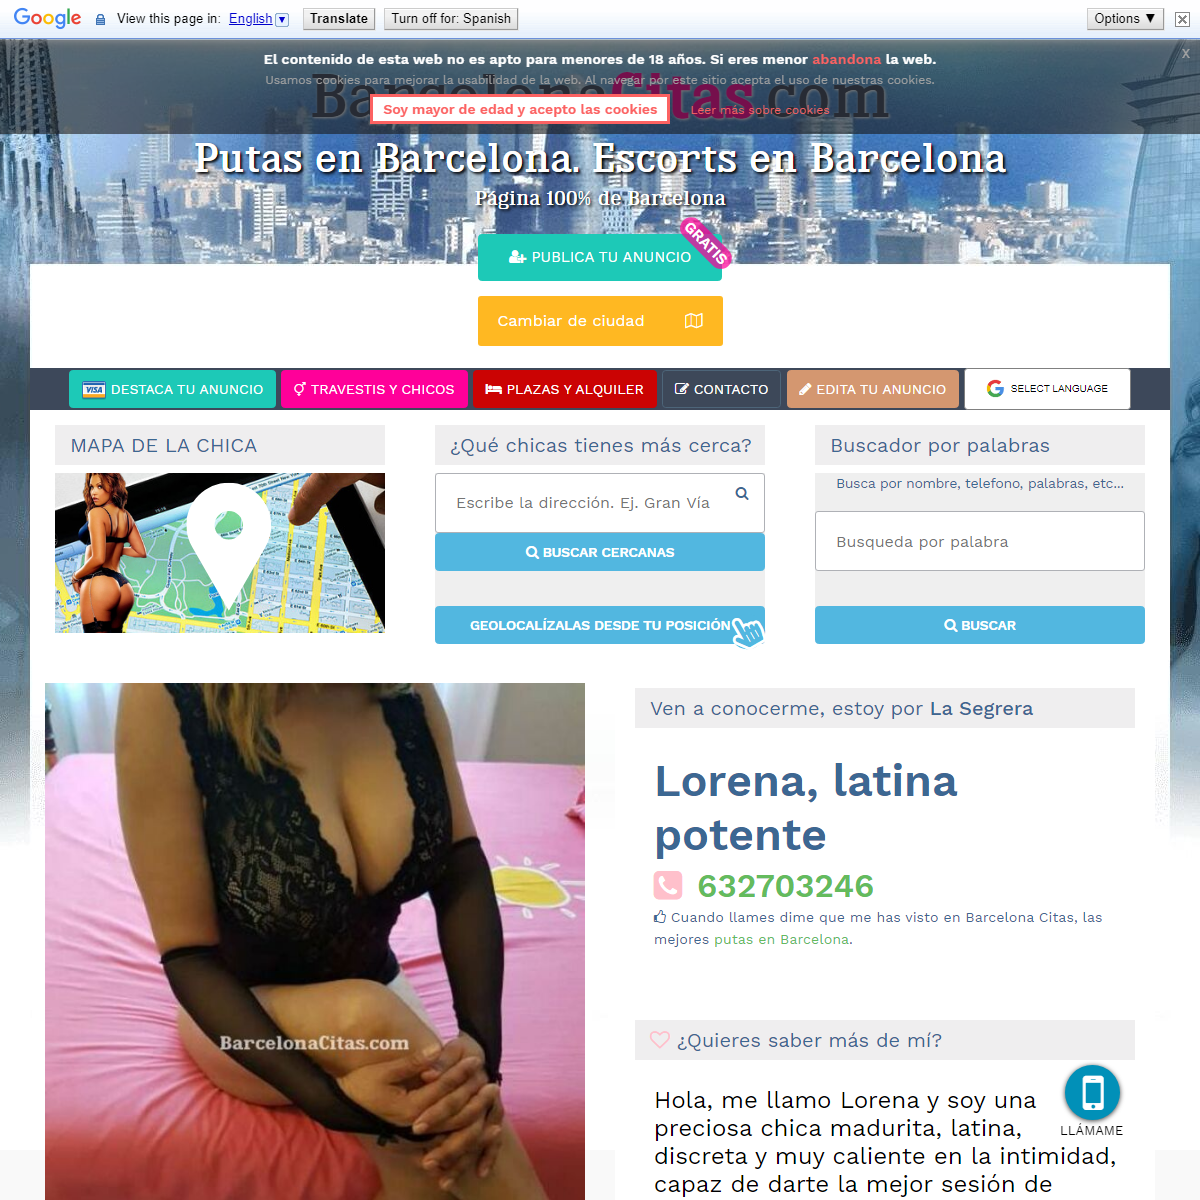 A complete backup of https://www.barcelonacitas.com/putas-barcelona-65169-lorena-latina-potente-632703246